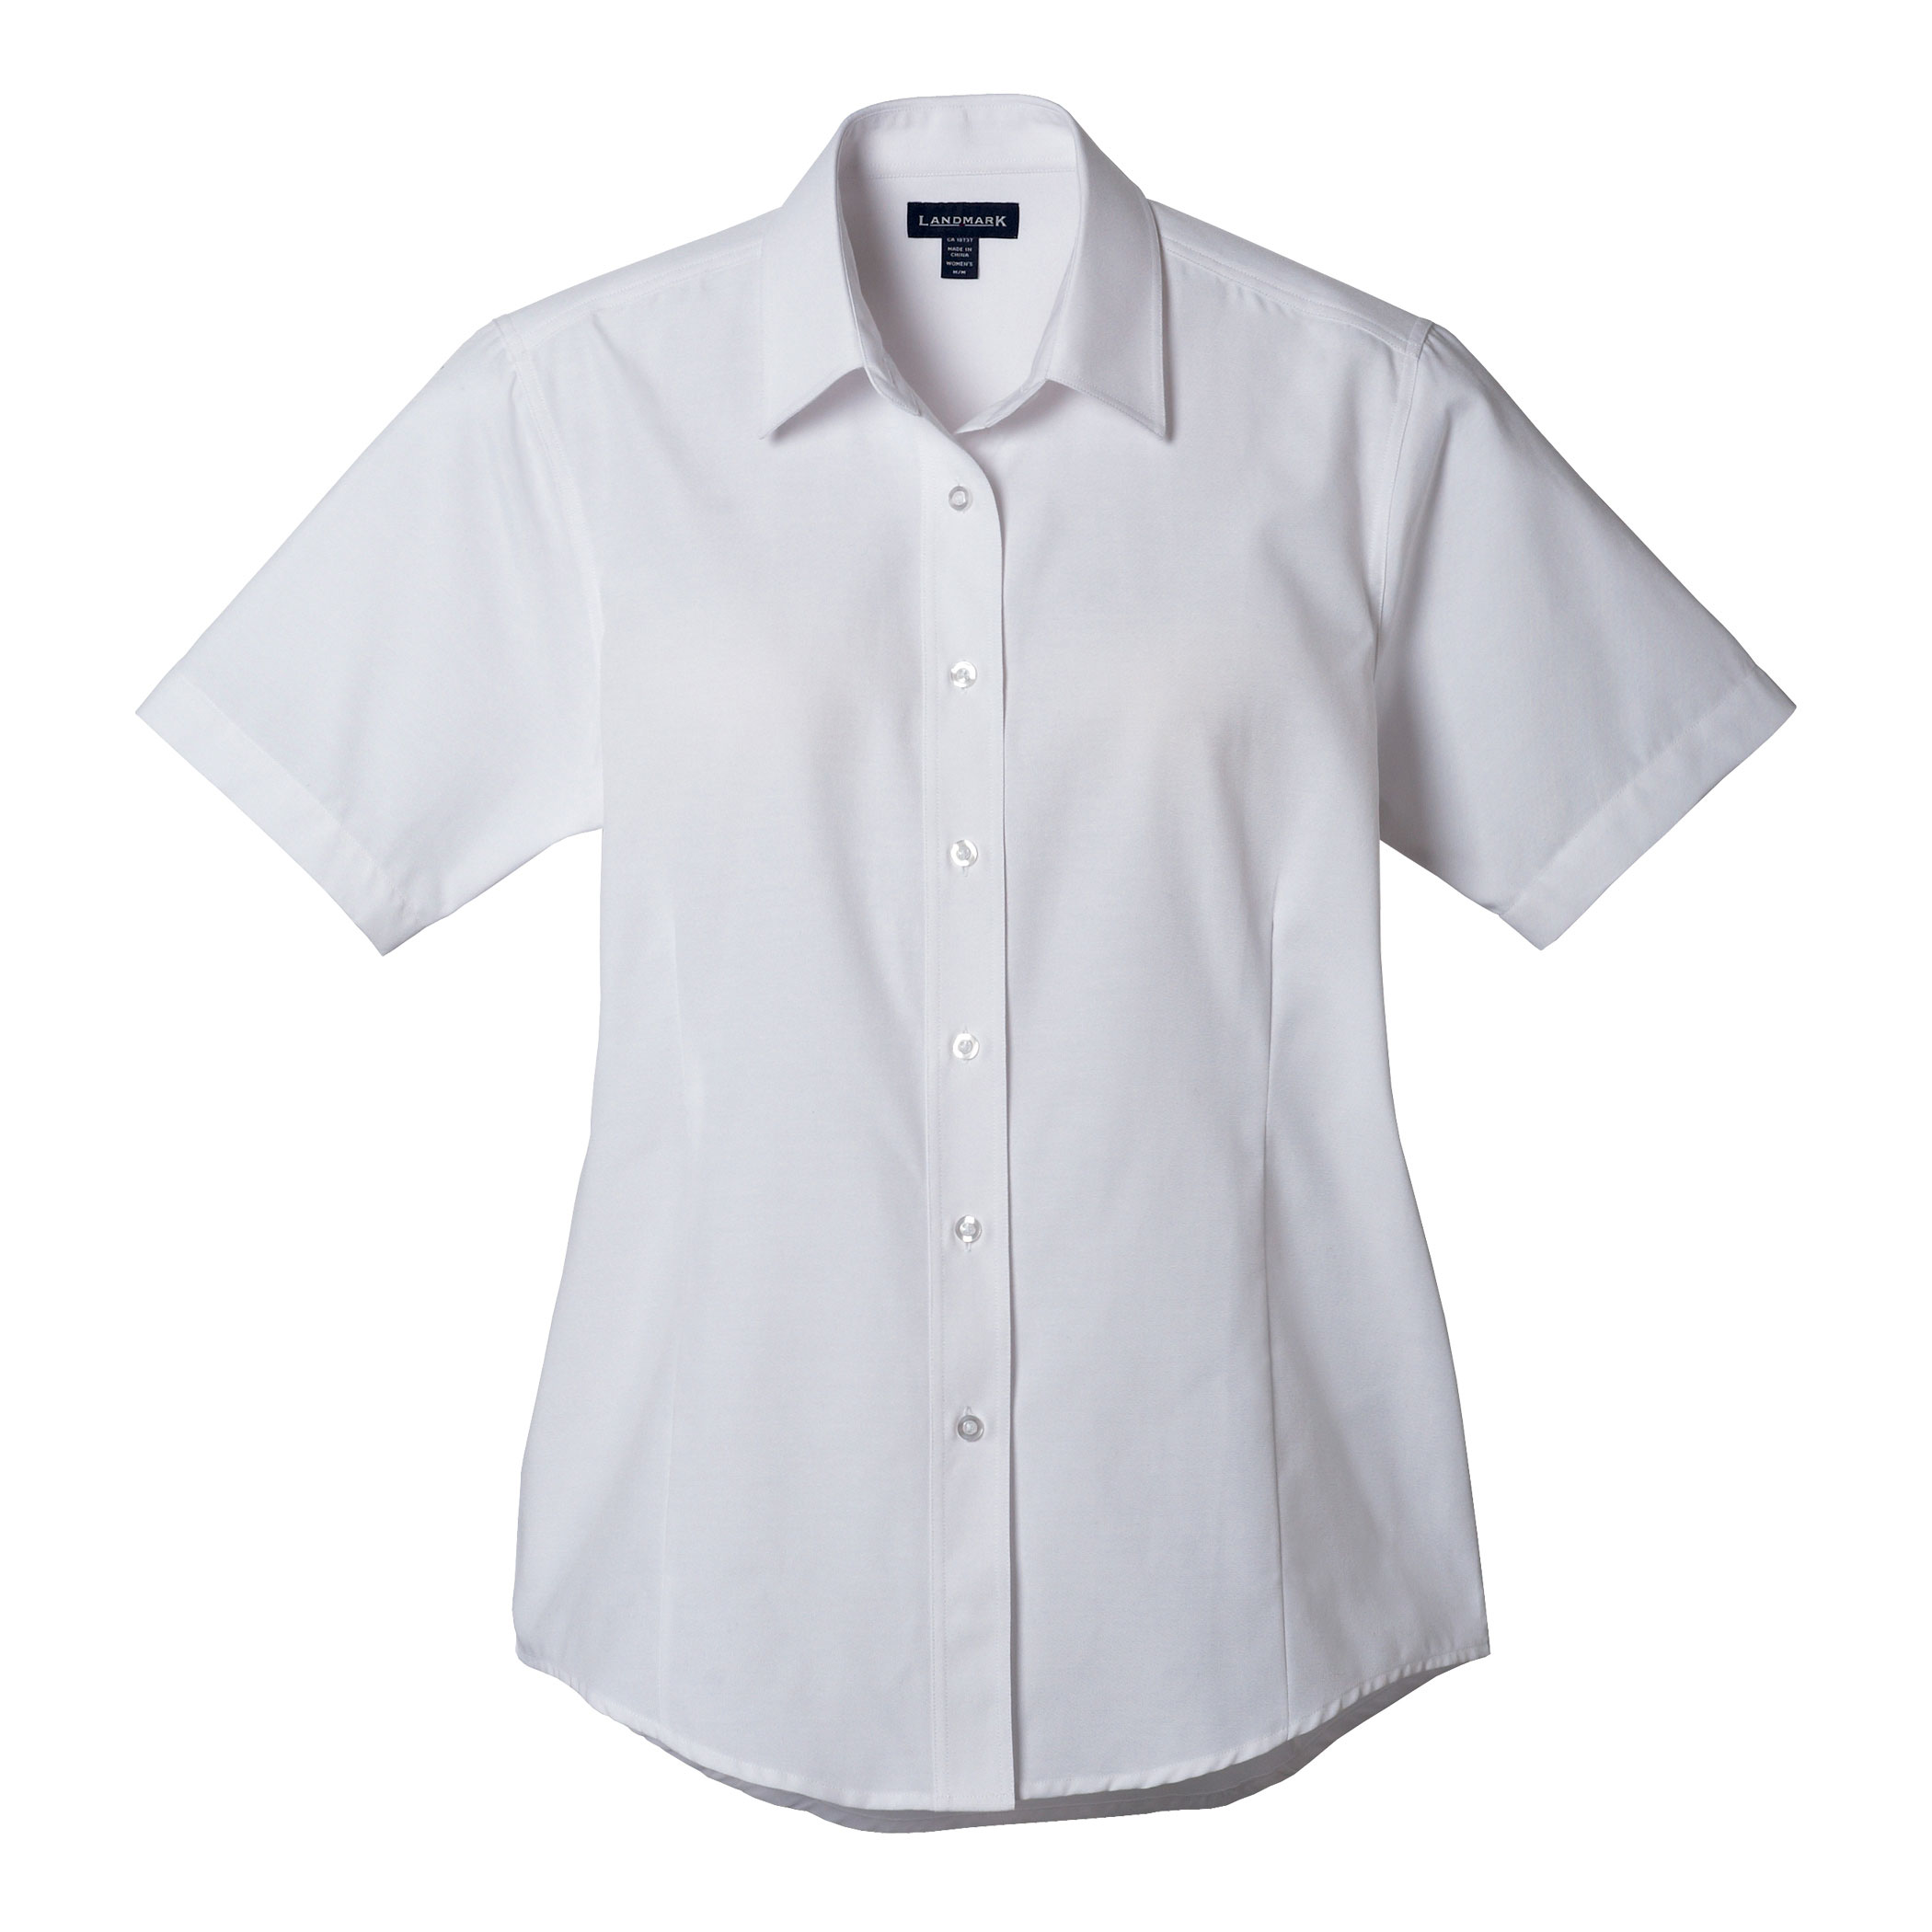 (W) LAMBERT Oxford SS shirt | Trimark Sportswear